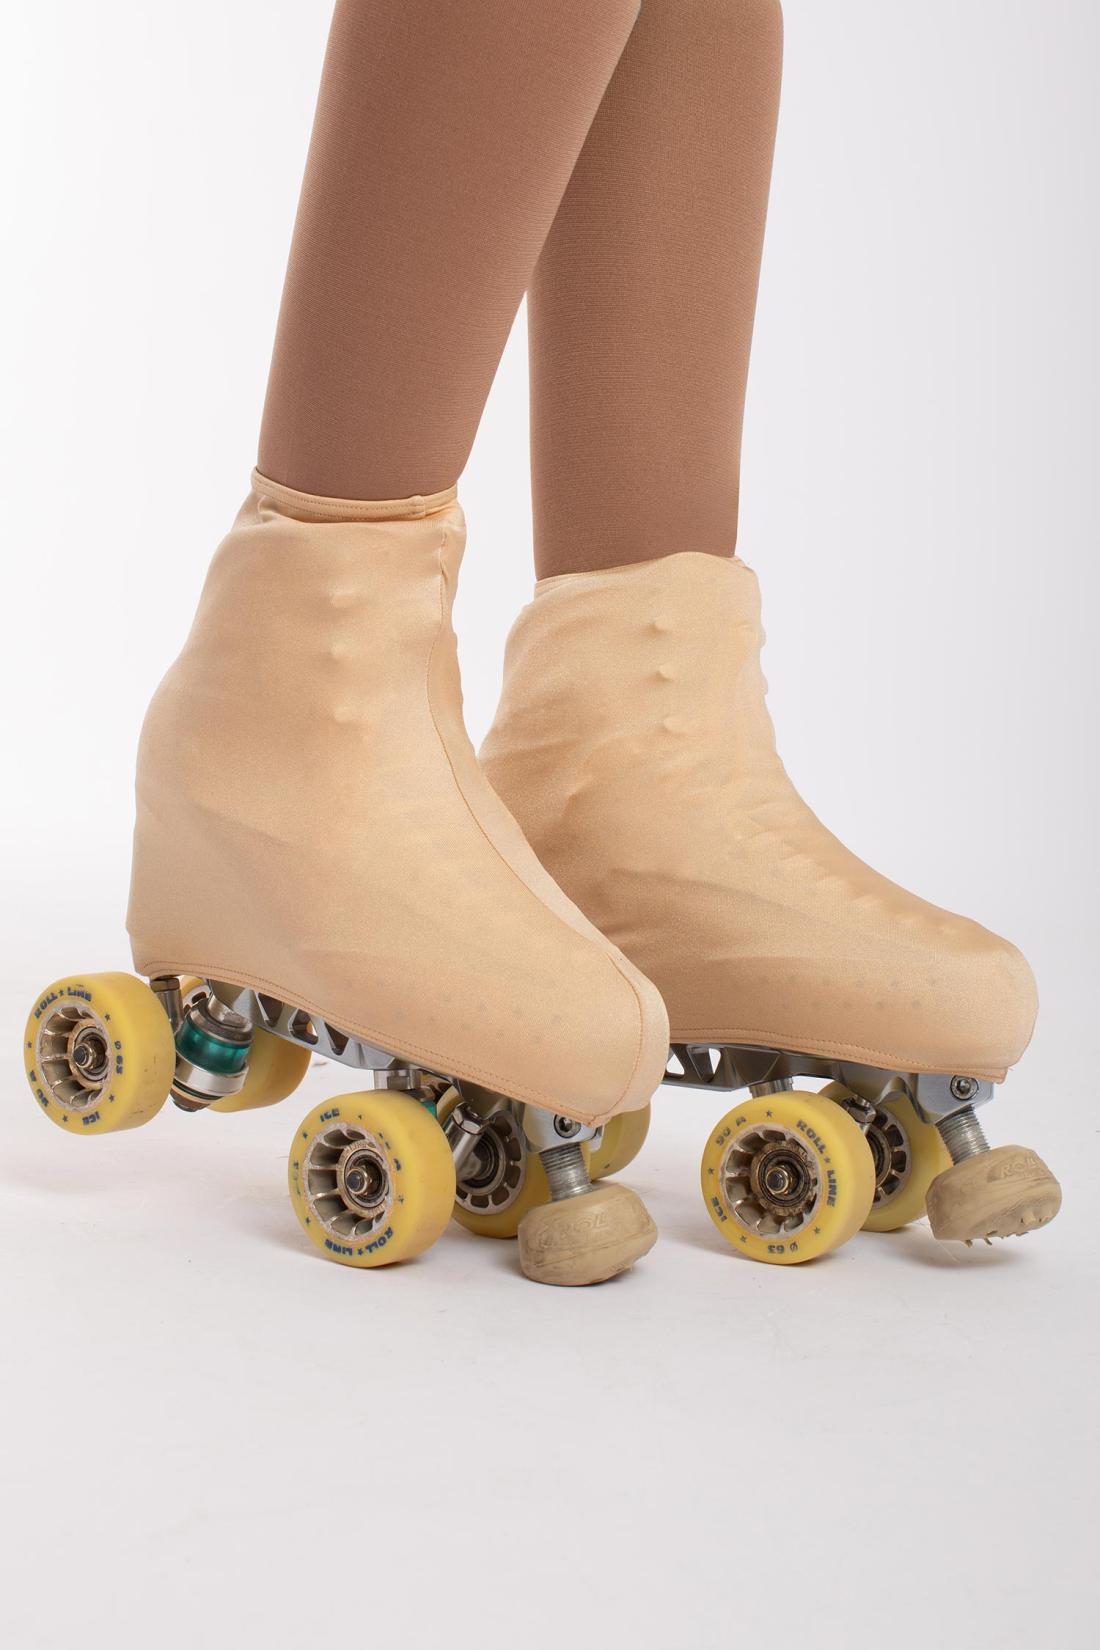 Figure Skating boot covers shiny Lycra fabric Intermezzo Dance